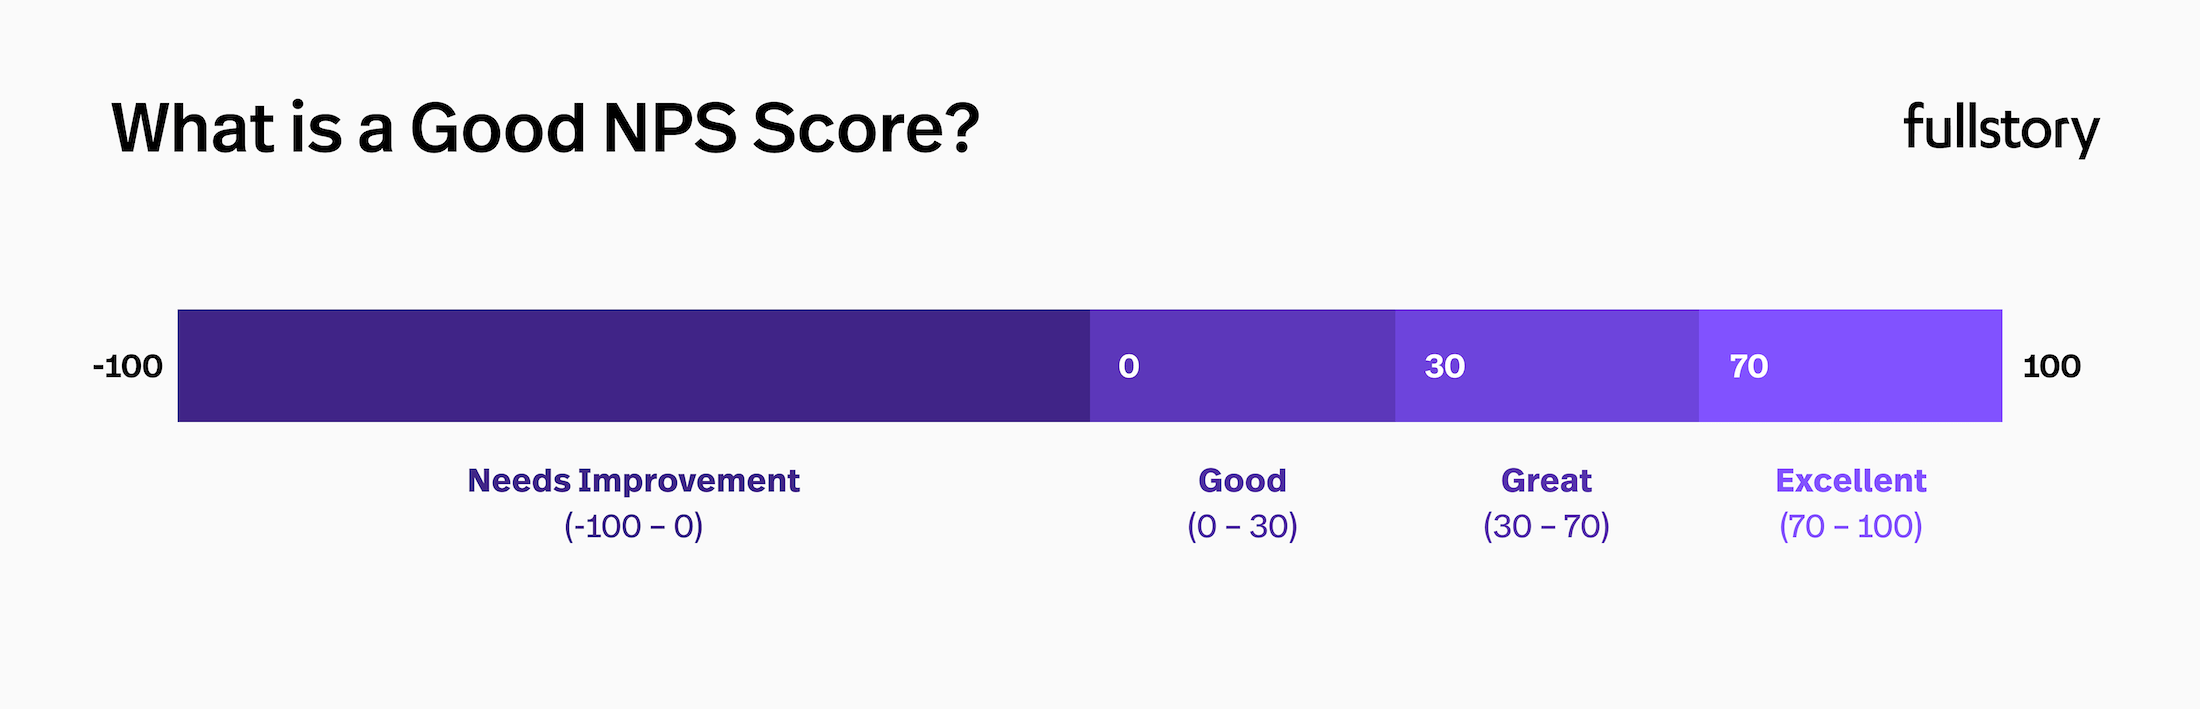 What is a Good NPS Score?